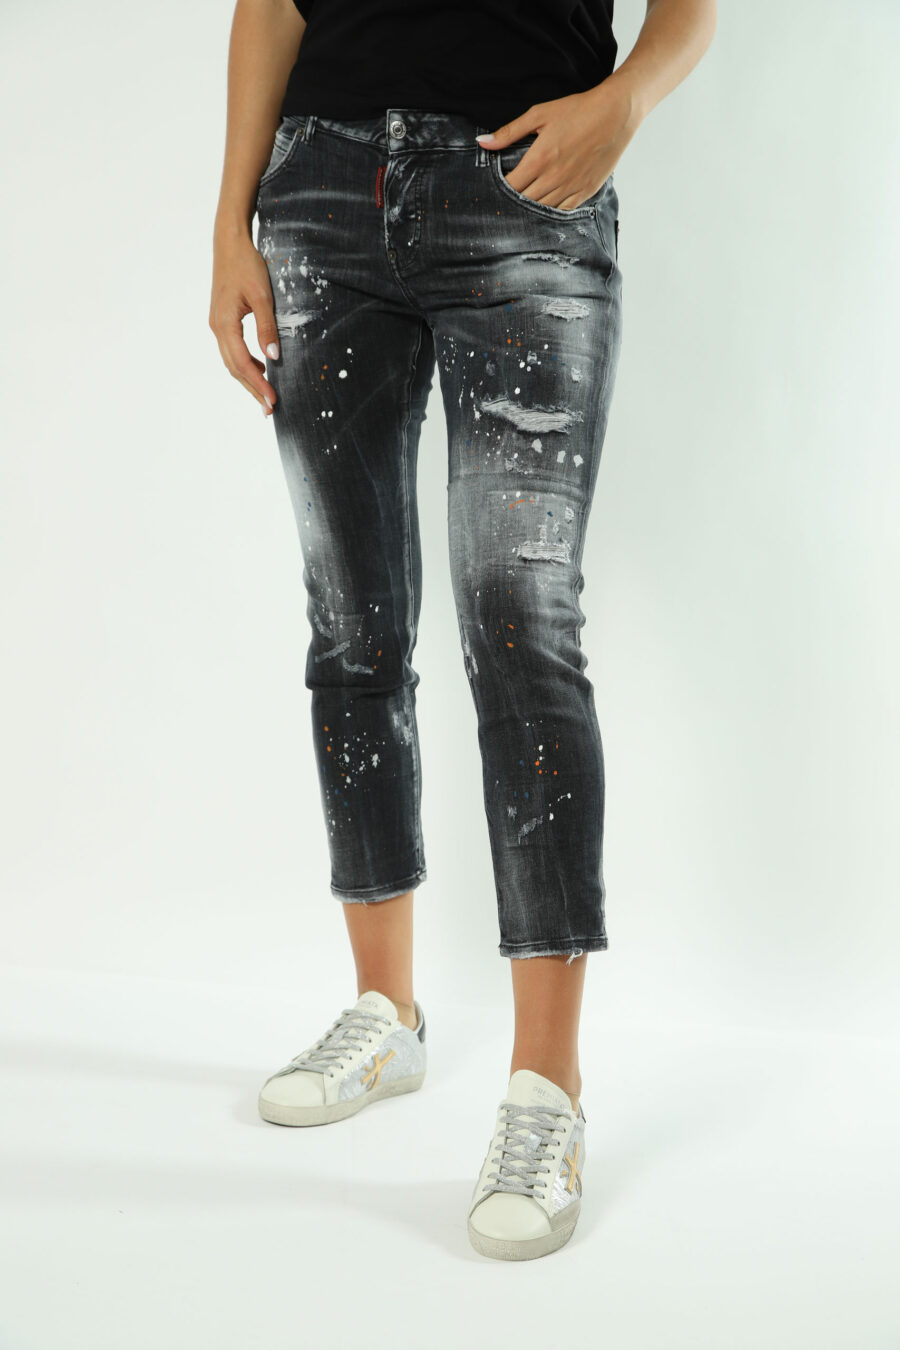 Schwarze "Cool-Girl-Jeans" mit mehrfarbiger Bemalung - Fotos 1538